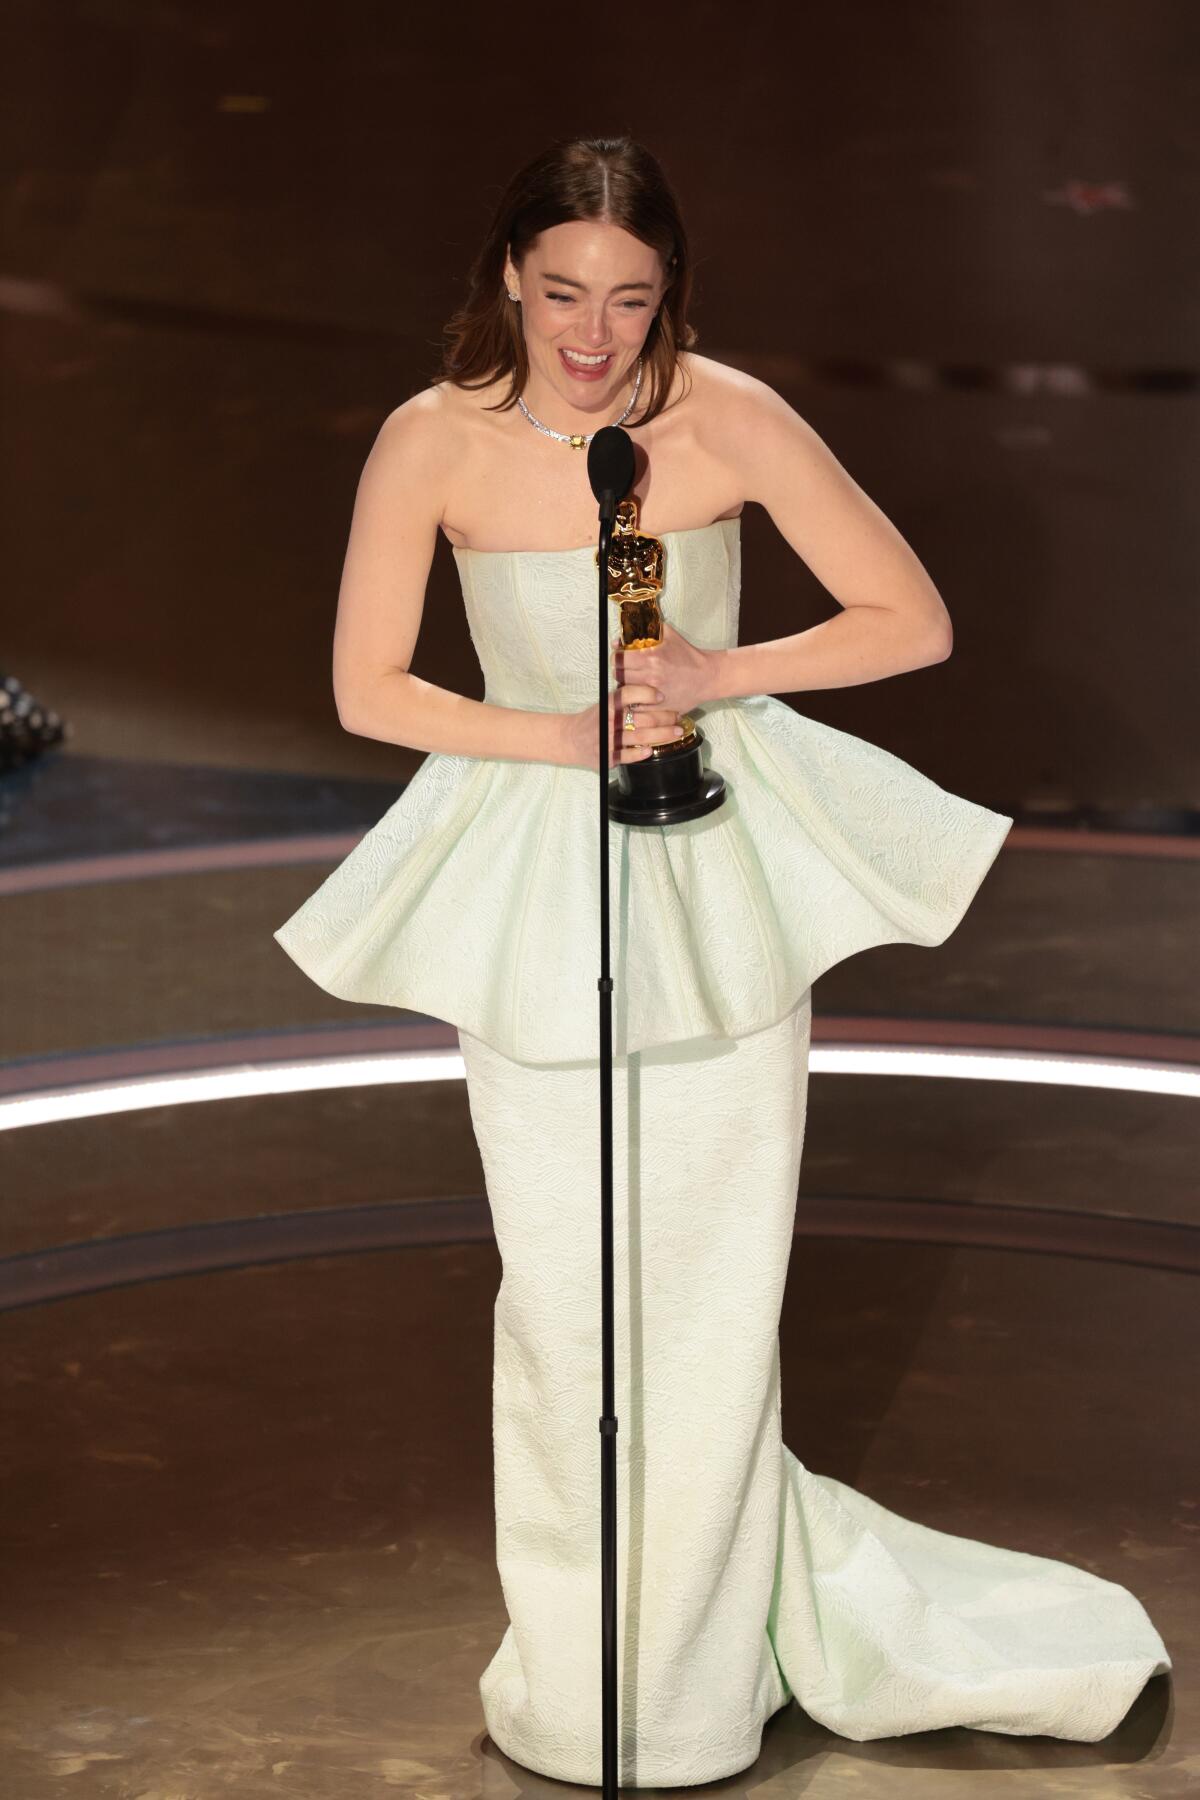 Emma Stone speaks into a microphone holding an oscar